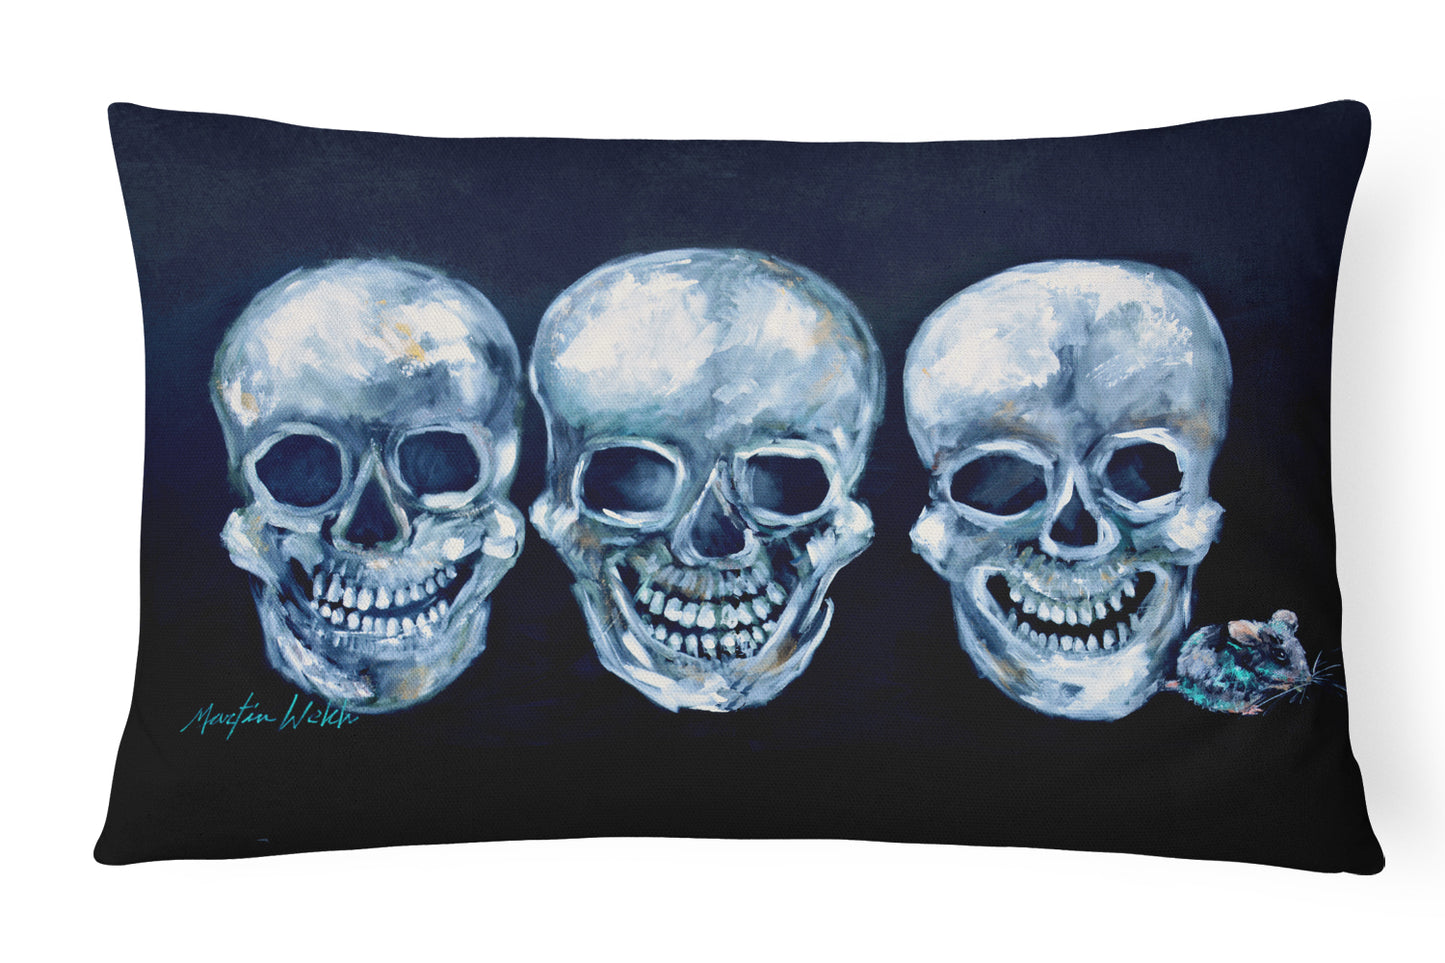 Buy this Ekk A Meece Canvas Fabric Decorative Pillow